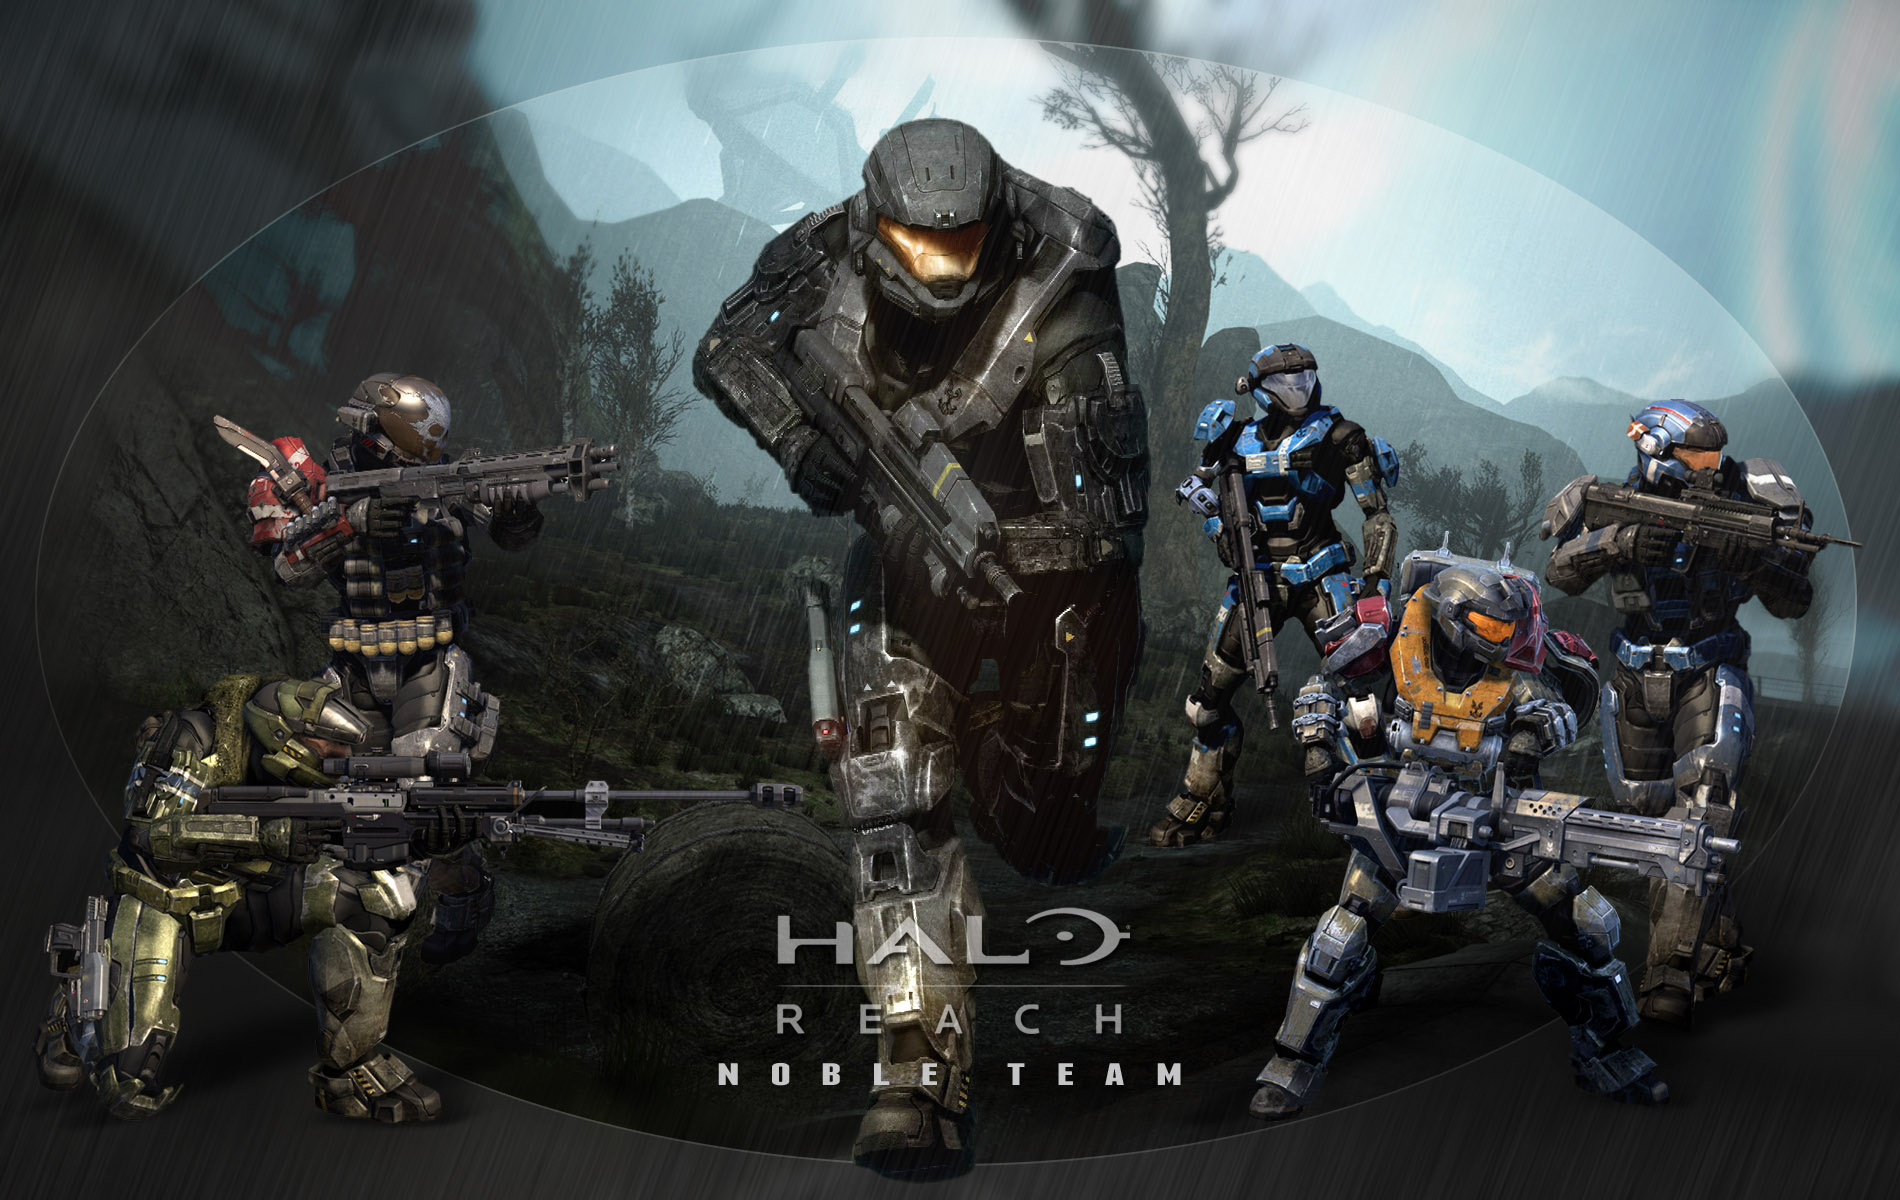 Halo reach noble team wallpaper